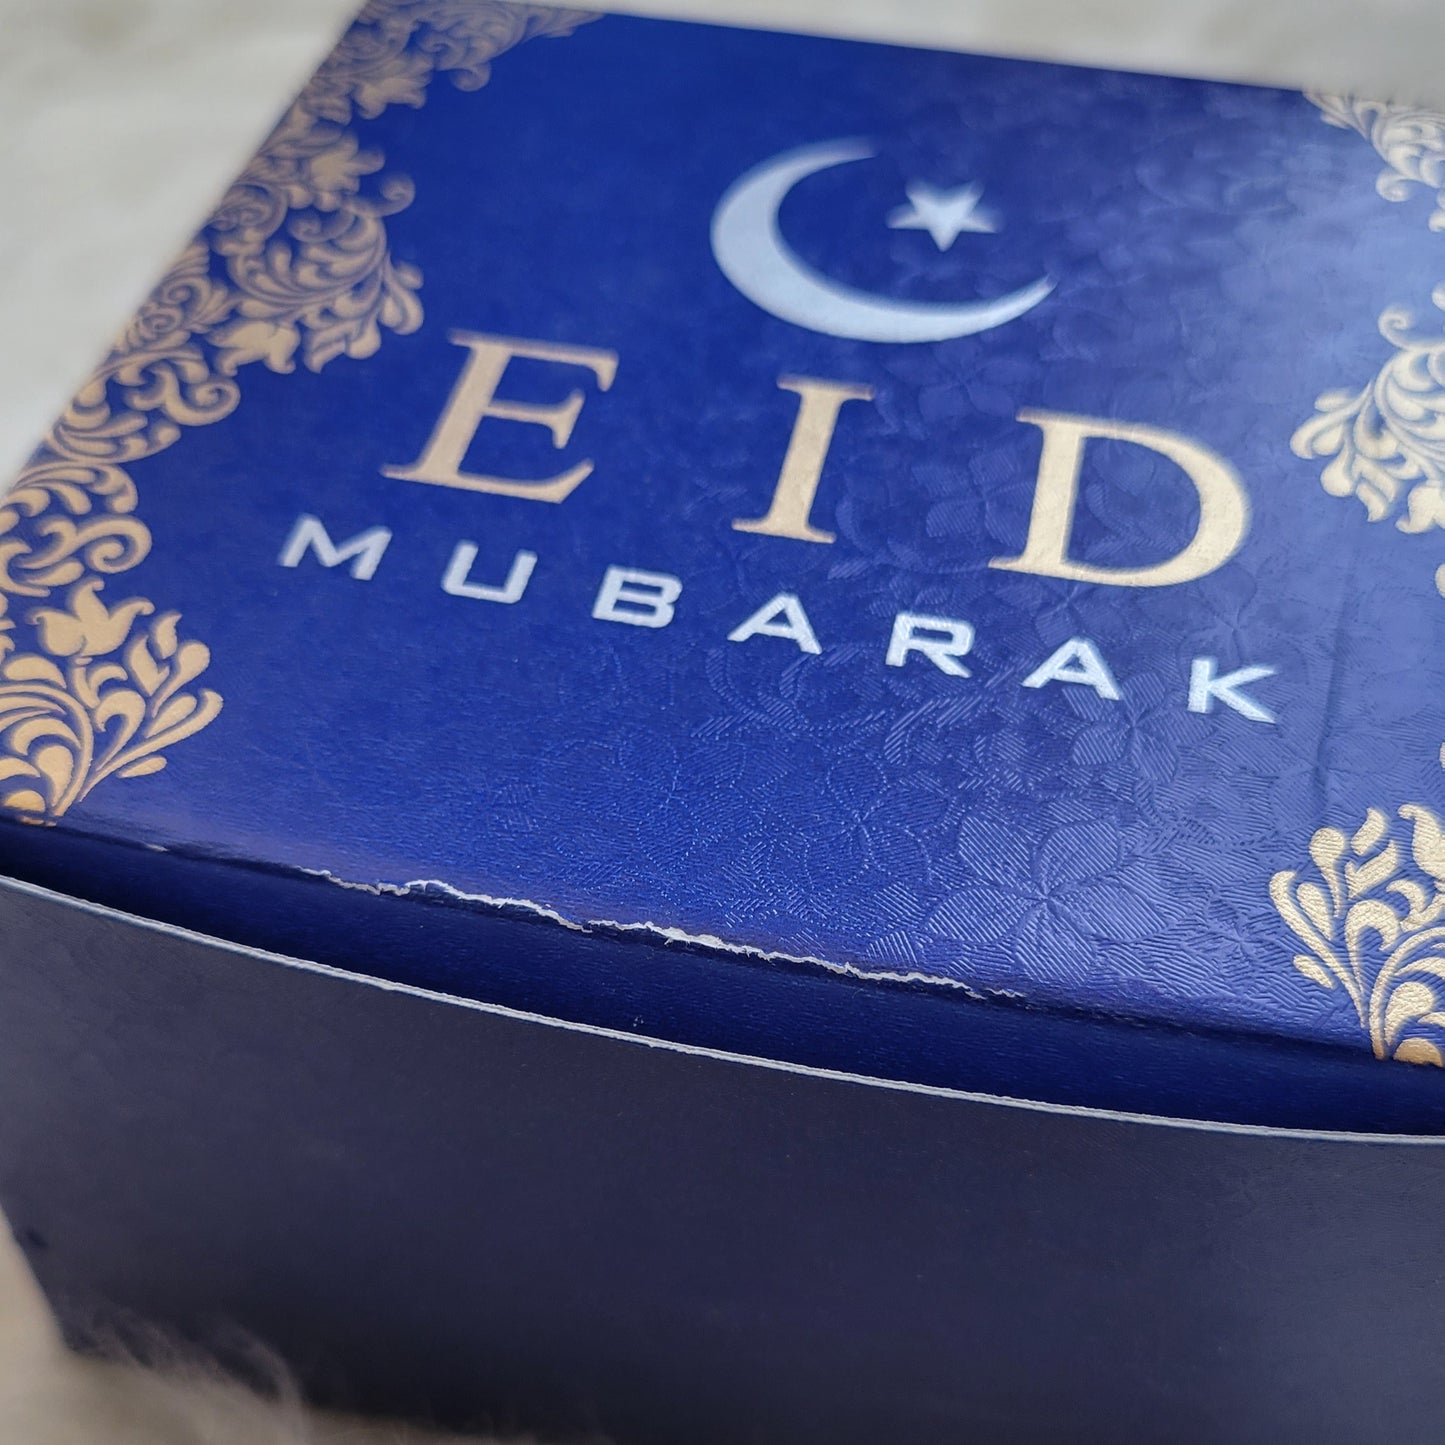 Eid Mubarak Sweets Box